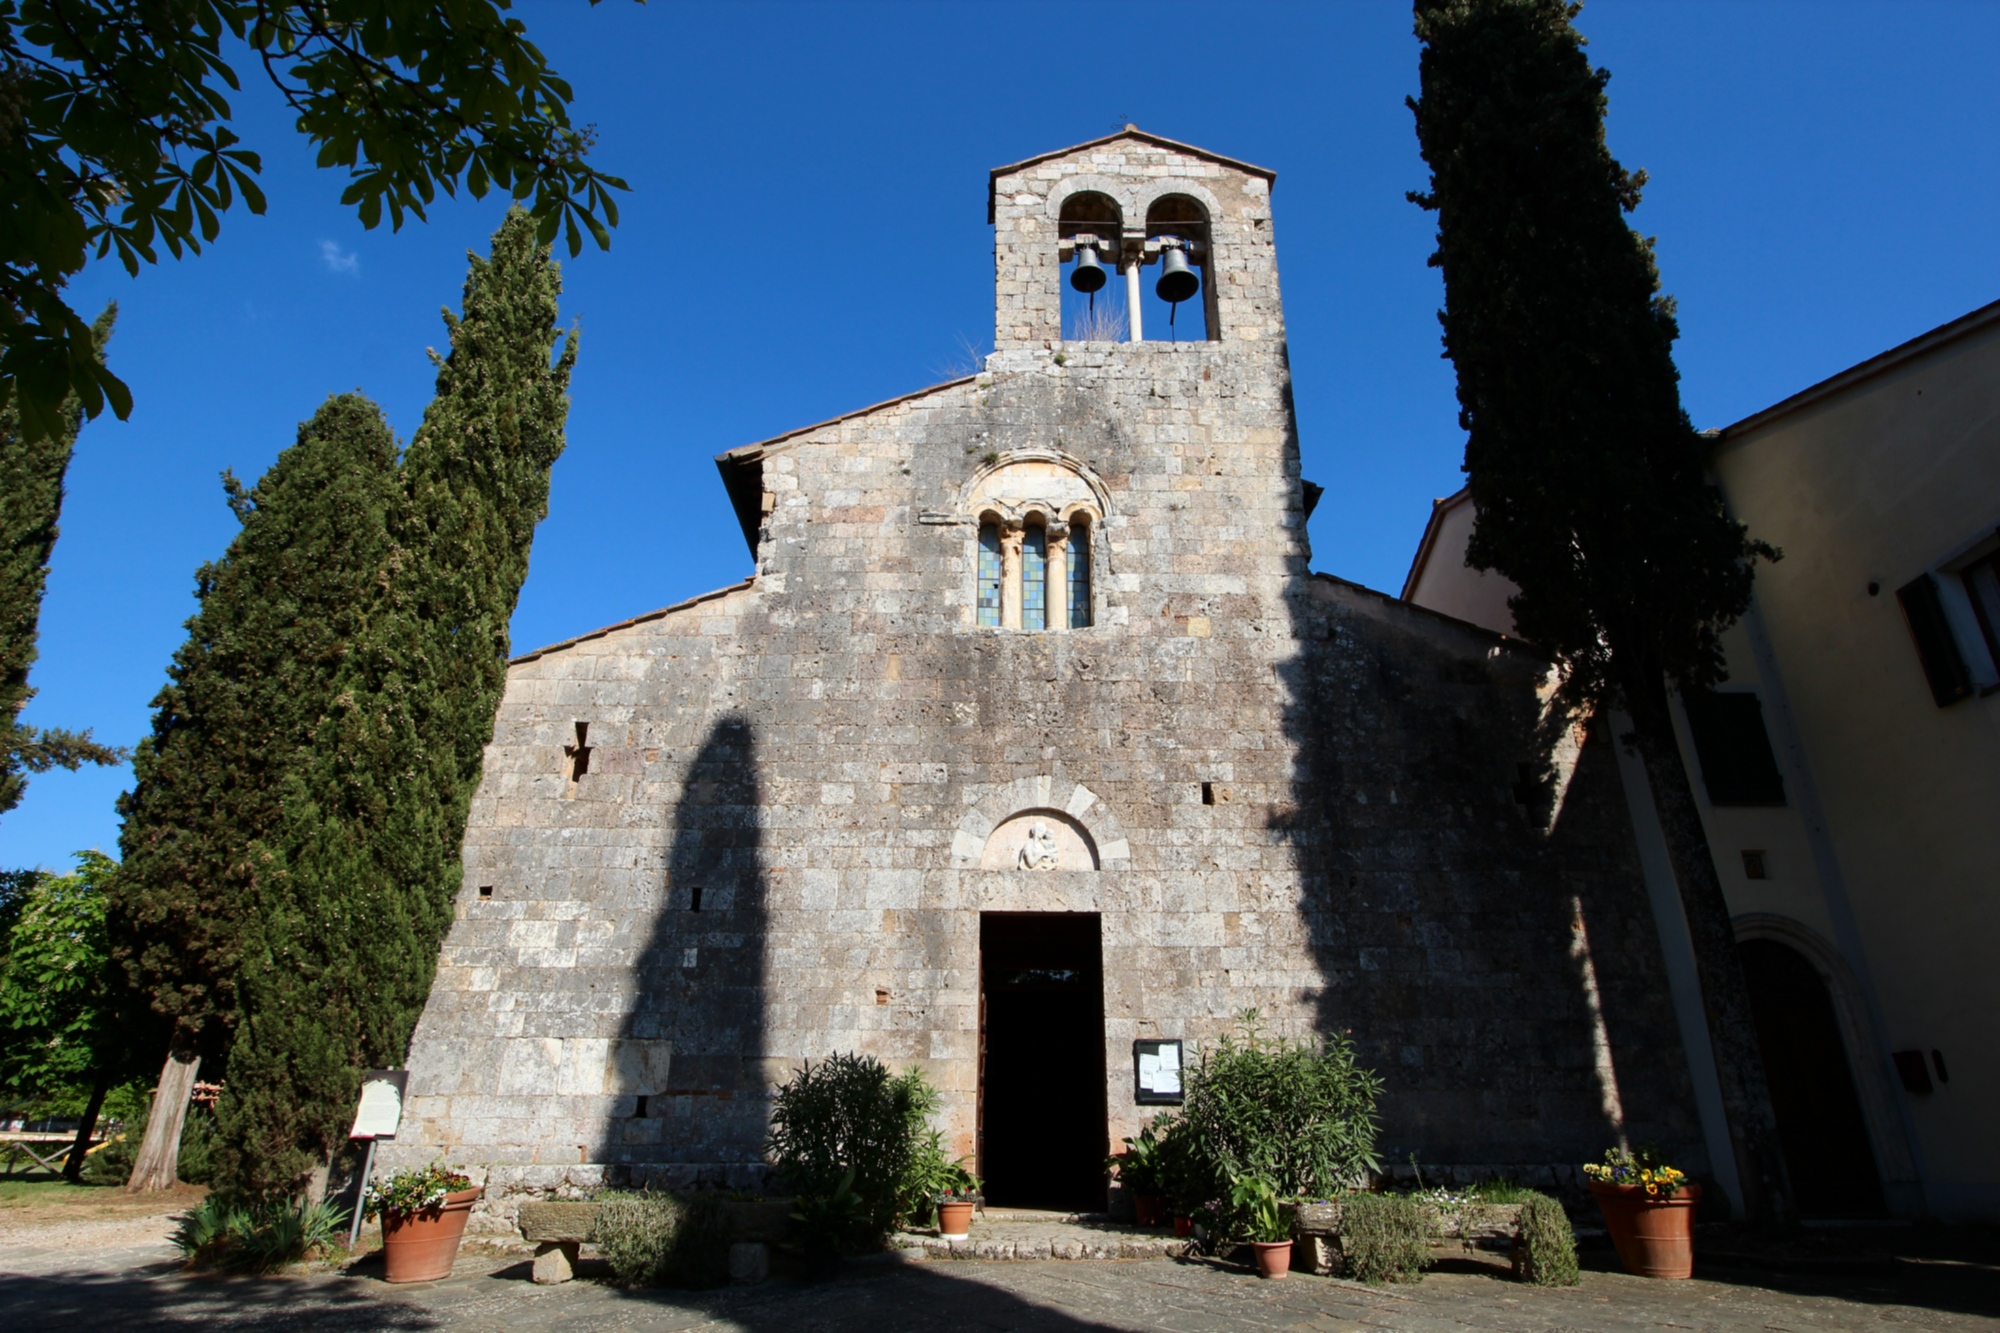 San Giovanni Battista church in Pievescola, Casole d'Elsa